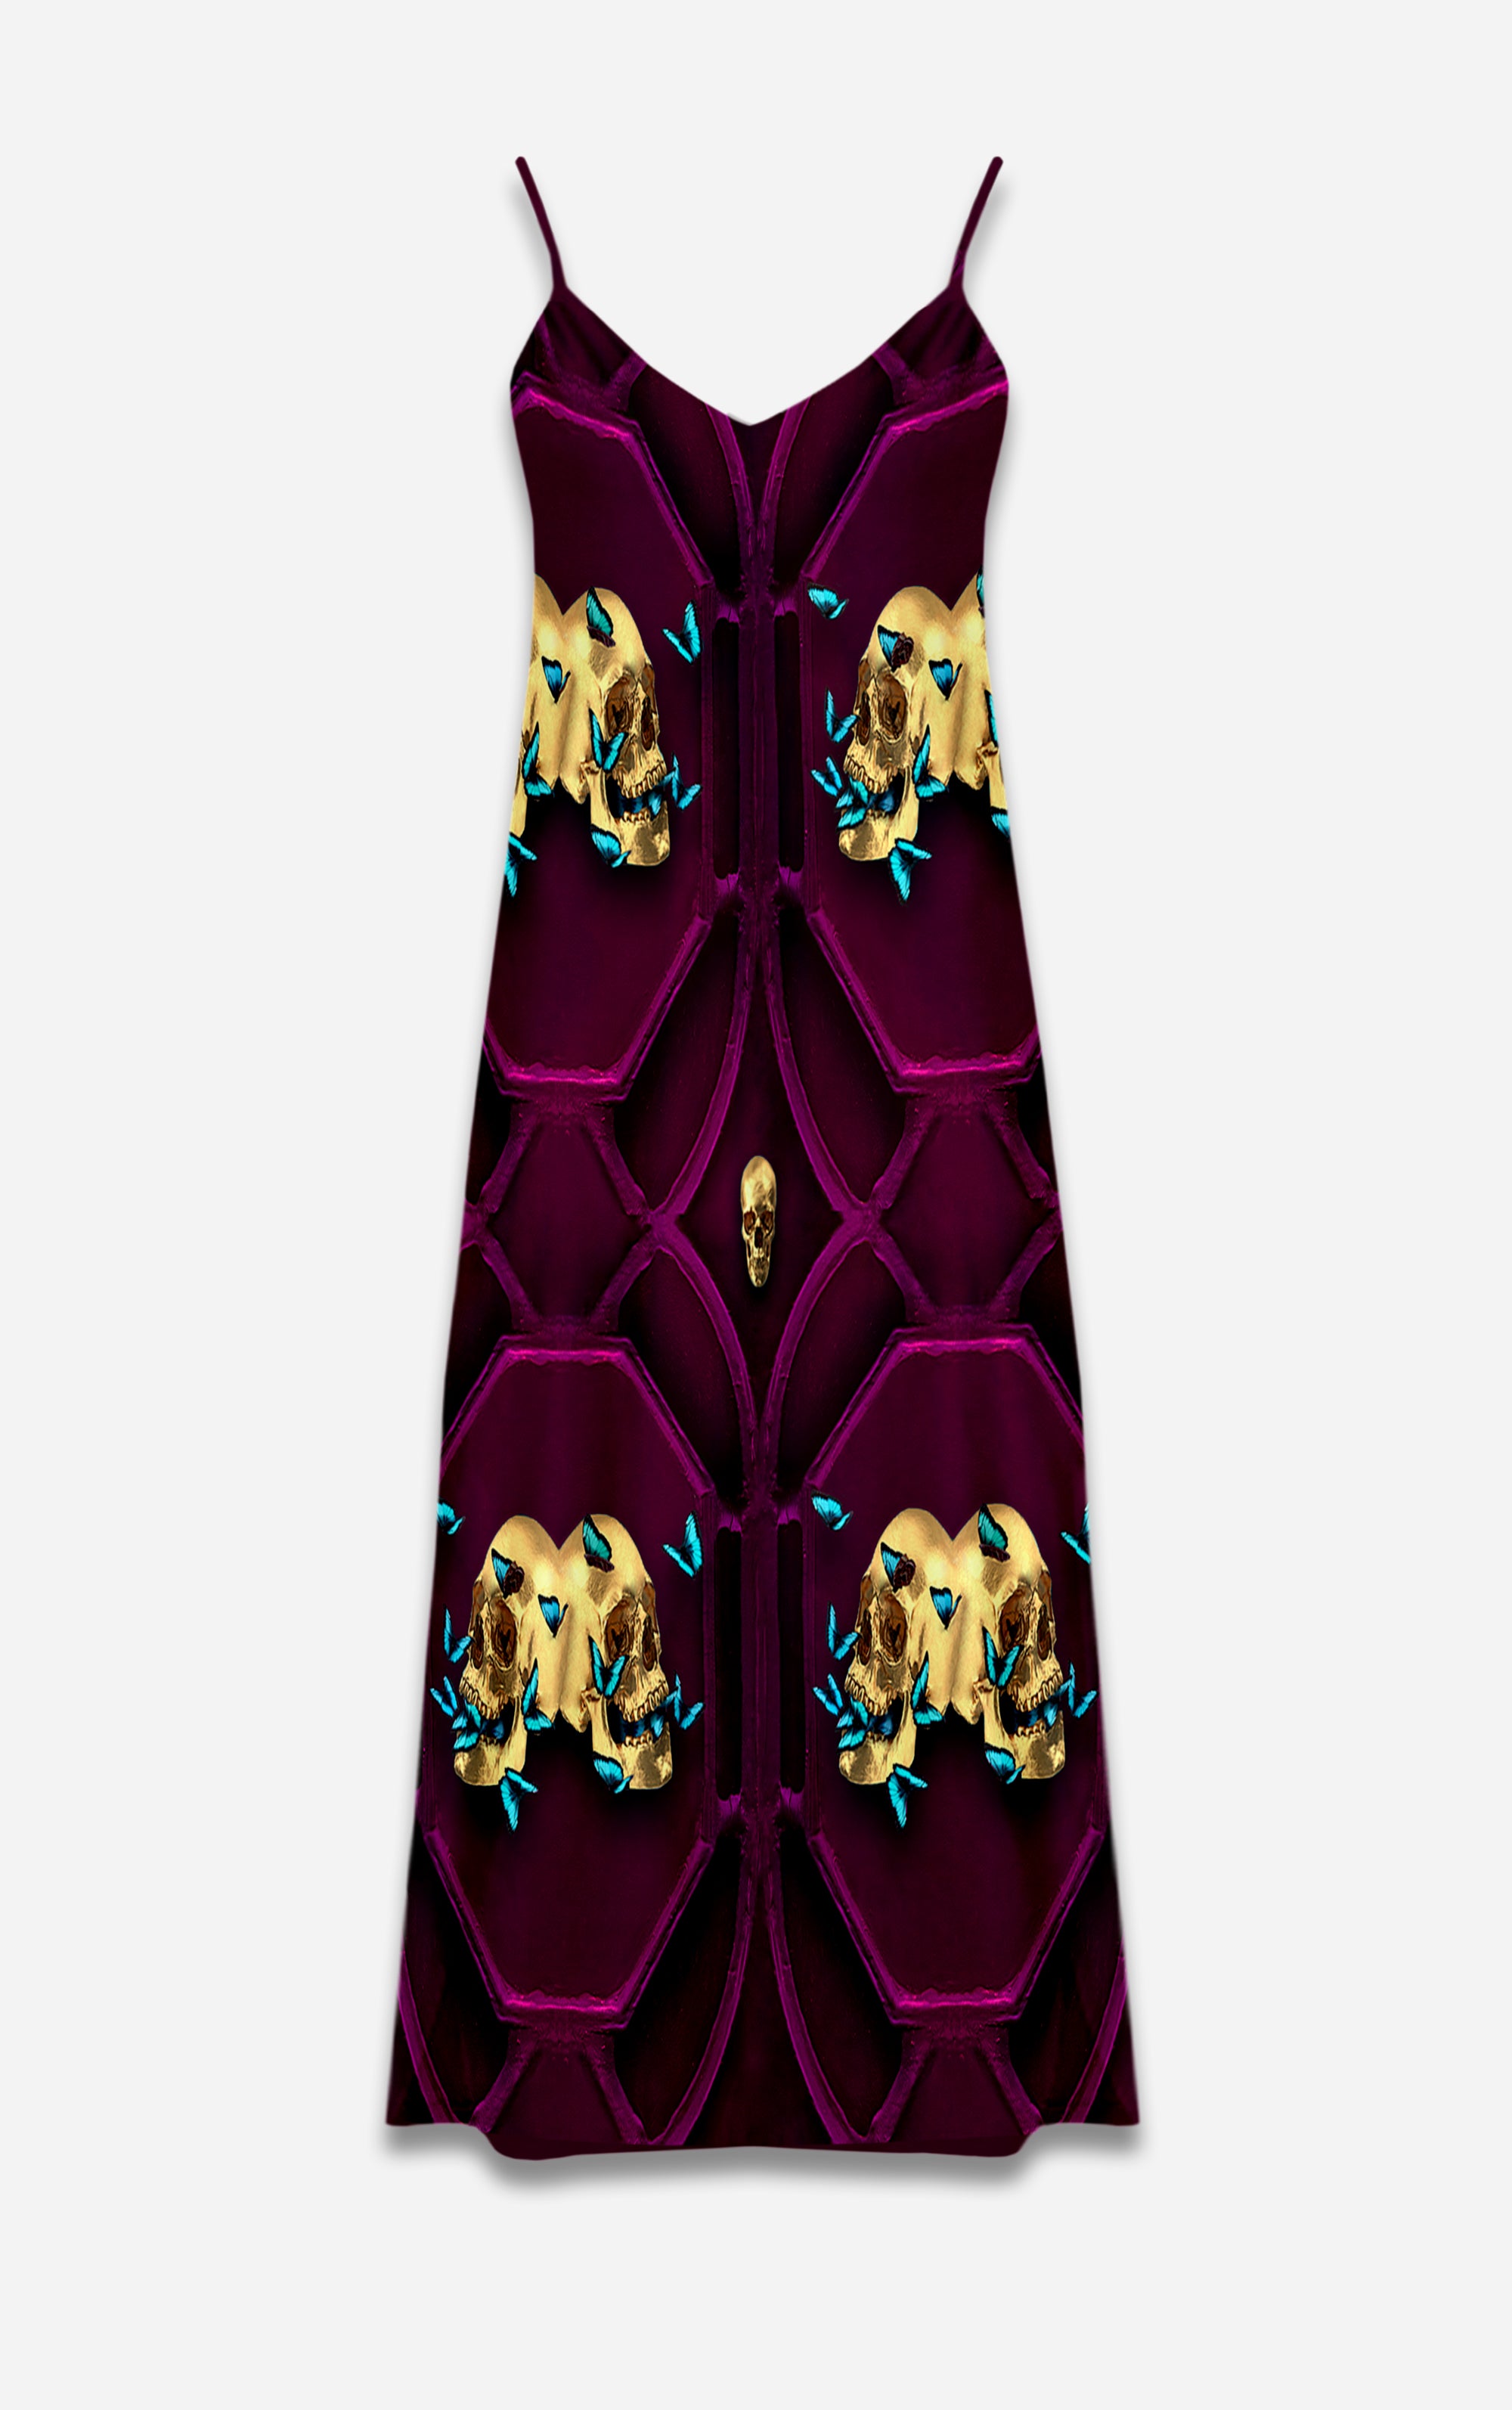 All Saints Double Nouveau- 100% Silk Satin French Gothic V Neck Slip Dress in Bold Eggplant Wine | Le Leanian™